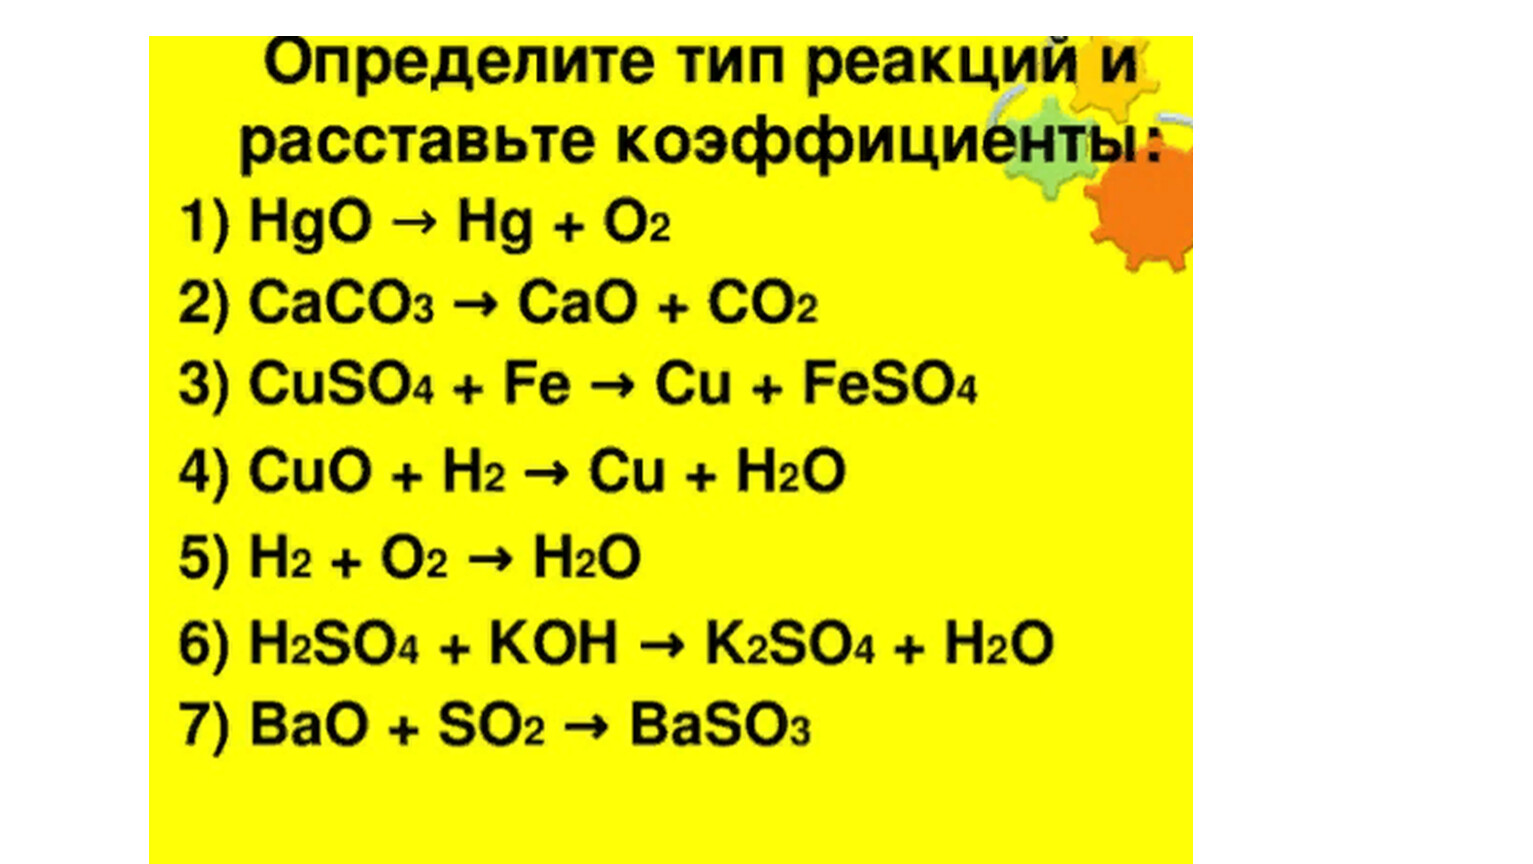 K2co3 agno3 h2o. Caco3 cao co2 Тип реакции. Расставьте коэффициент и определит Тип рякции. Расставить коэффициенты и определить Тип химической реакции. Расставьте коэффициенты и определите Тип химической реакции.